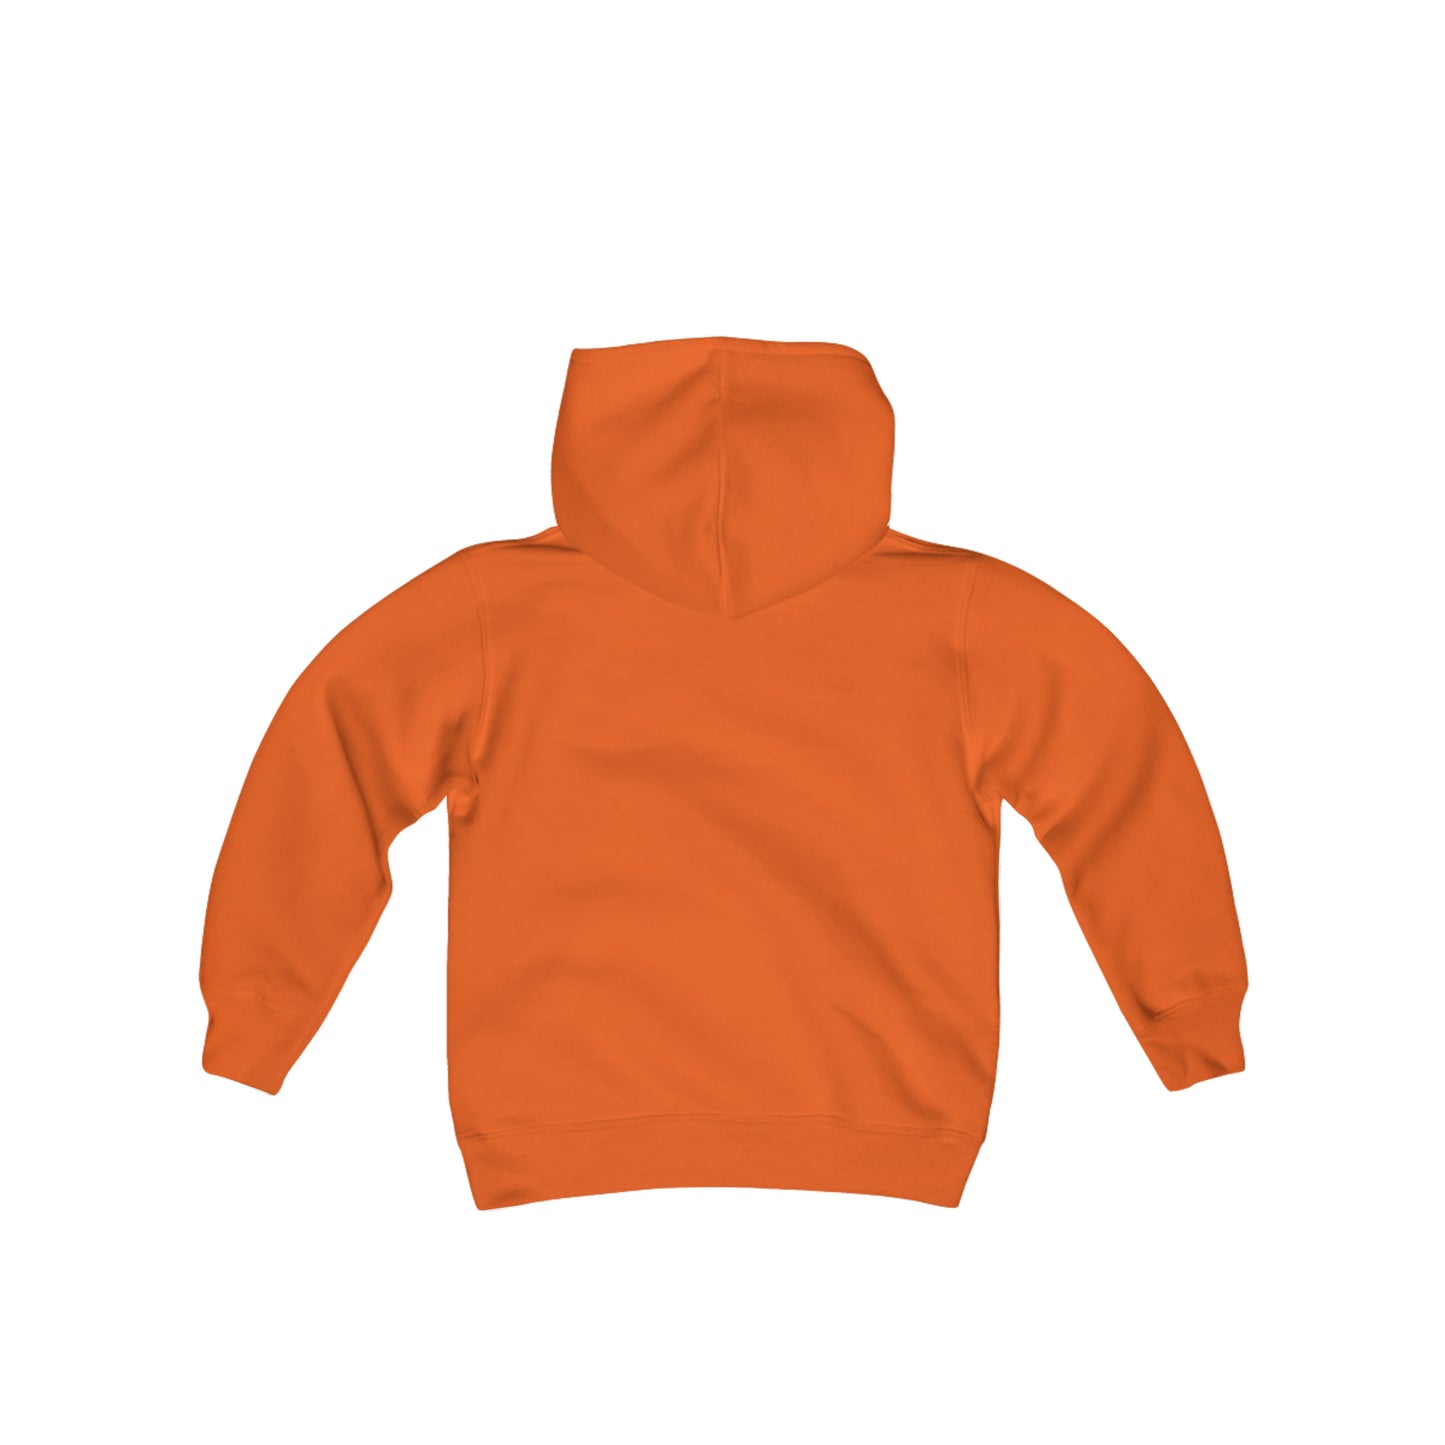 Baller - Youth Heavy Blend Hooded Sweatshirt